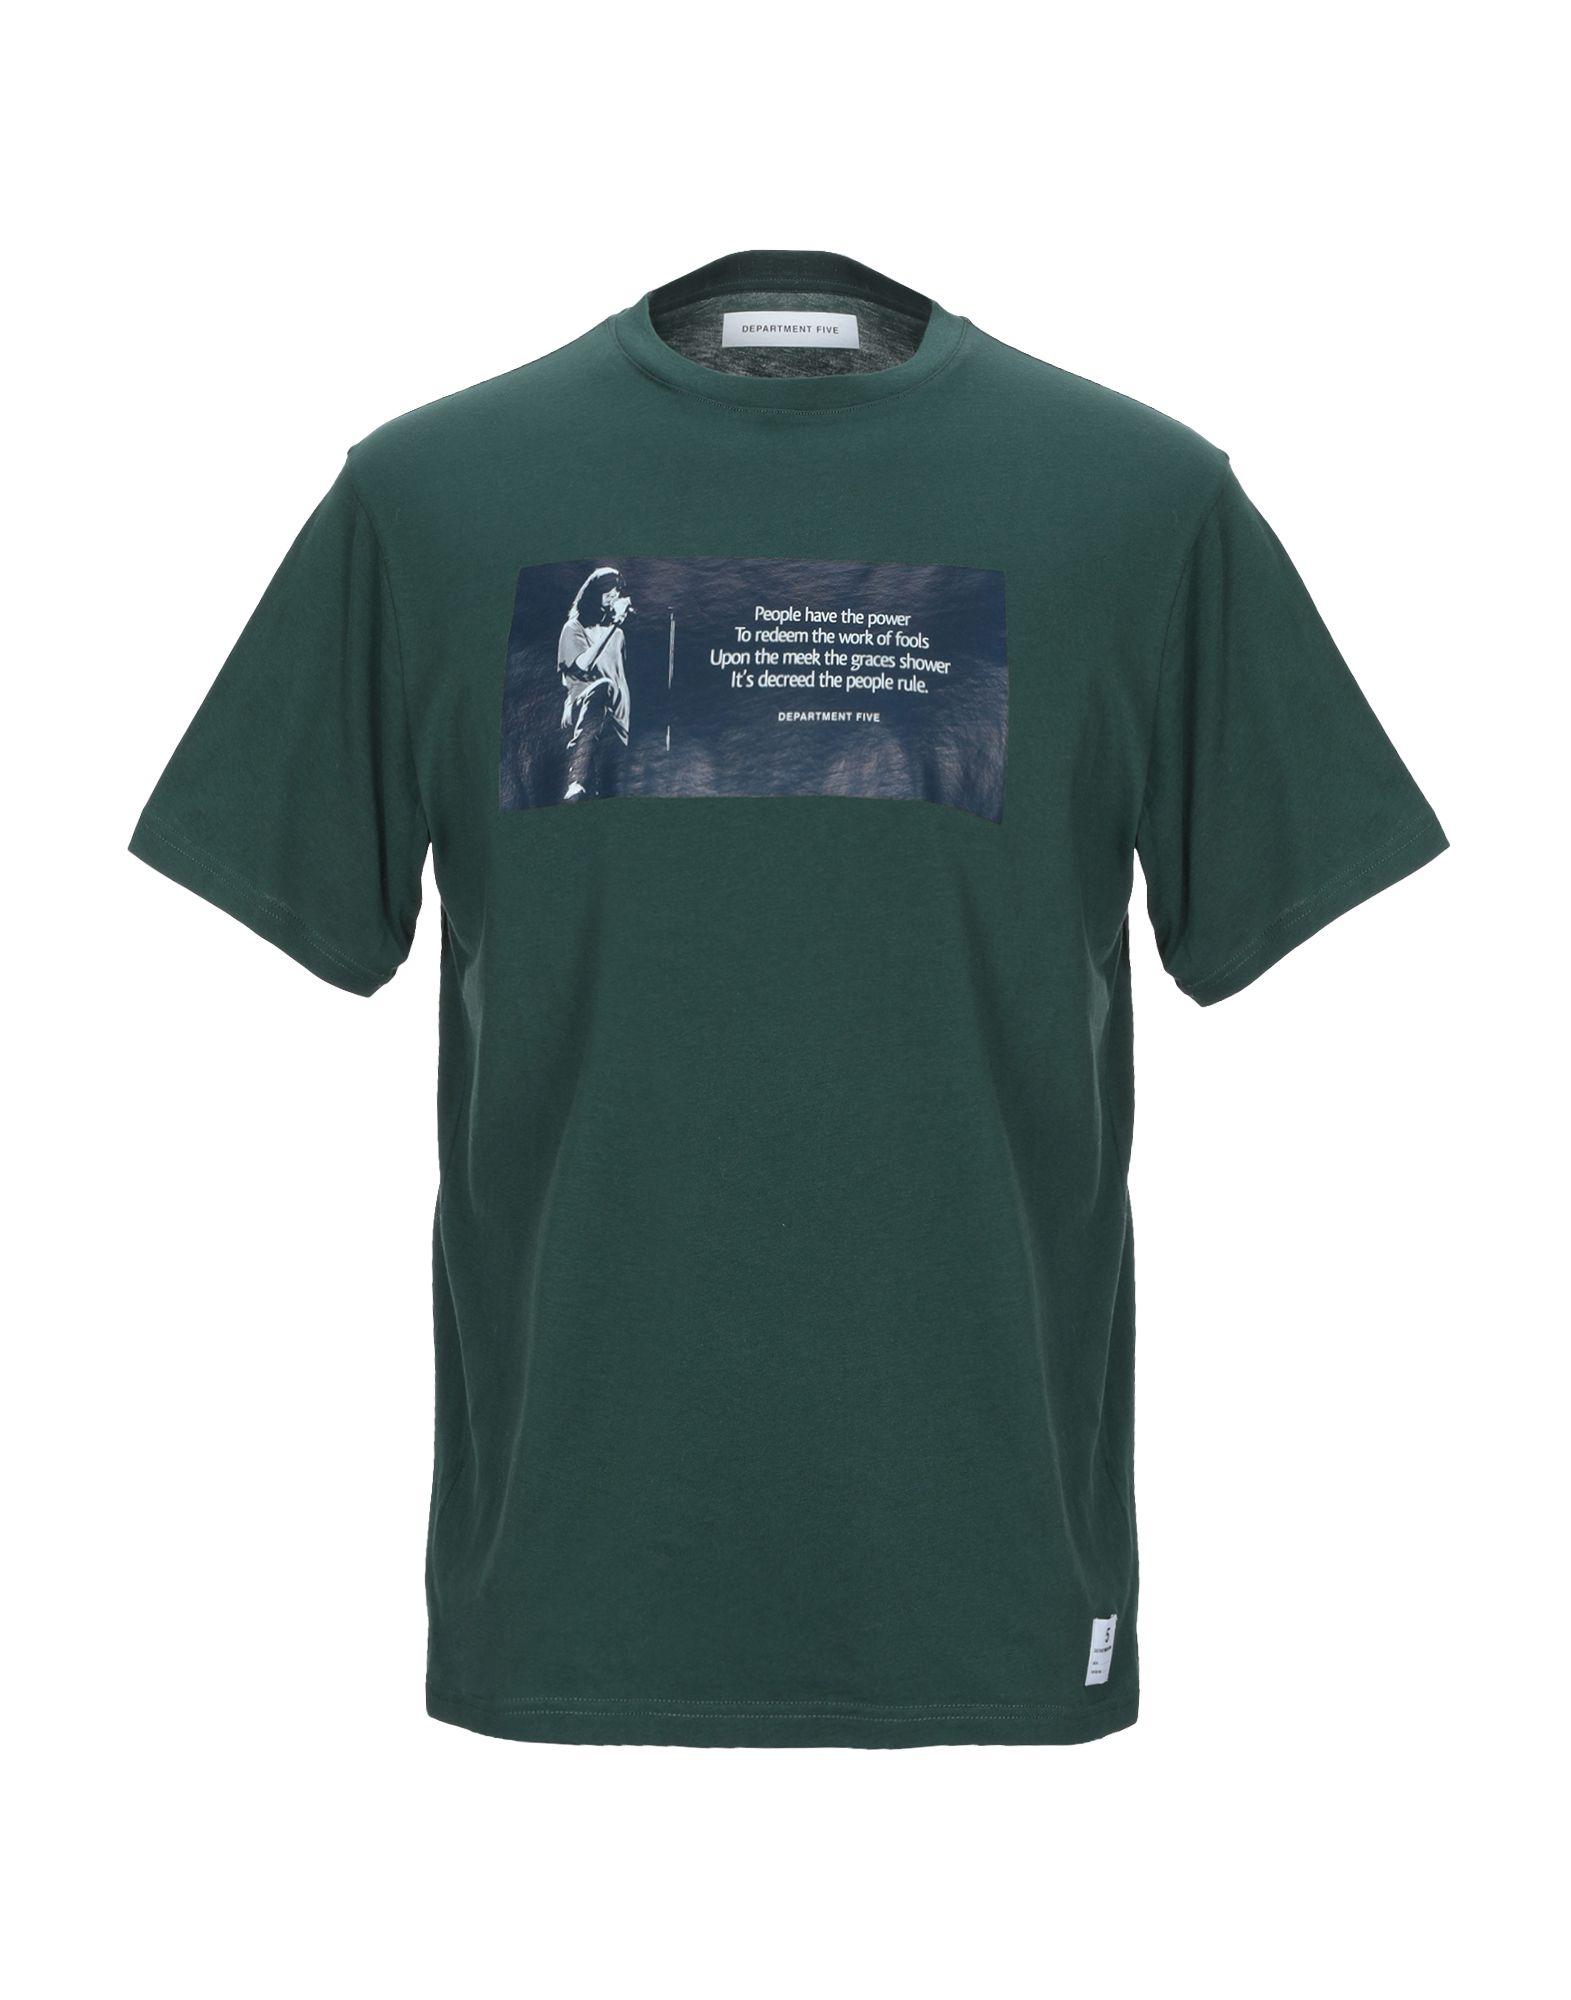 Department 5 Cotton T-shirt in Dark Green (Green) for Men - Lyst